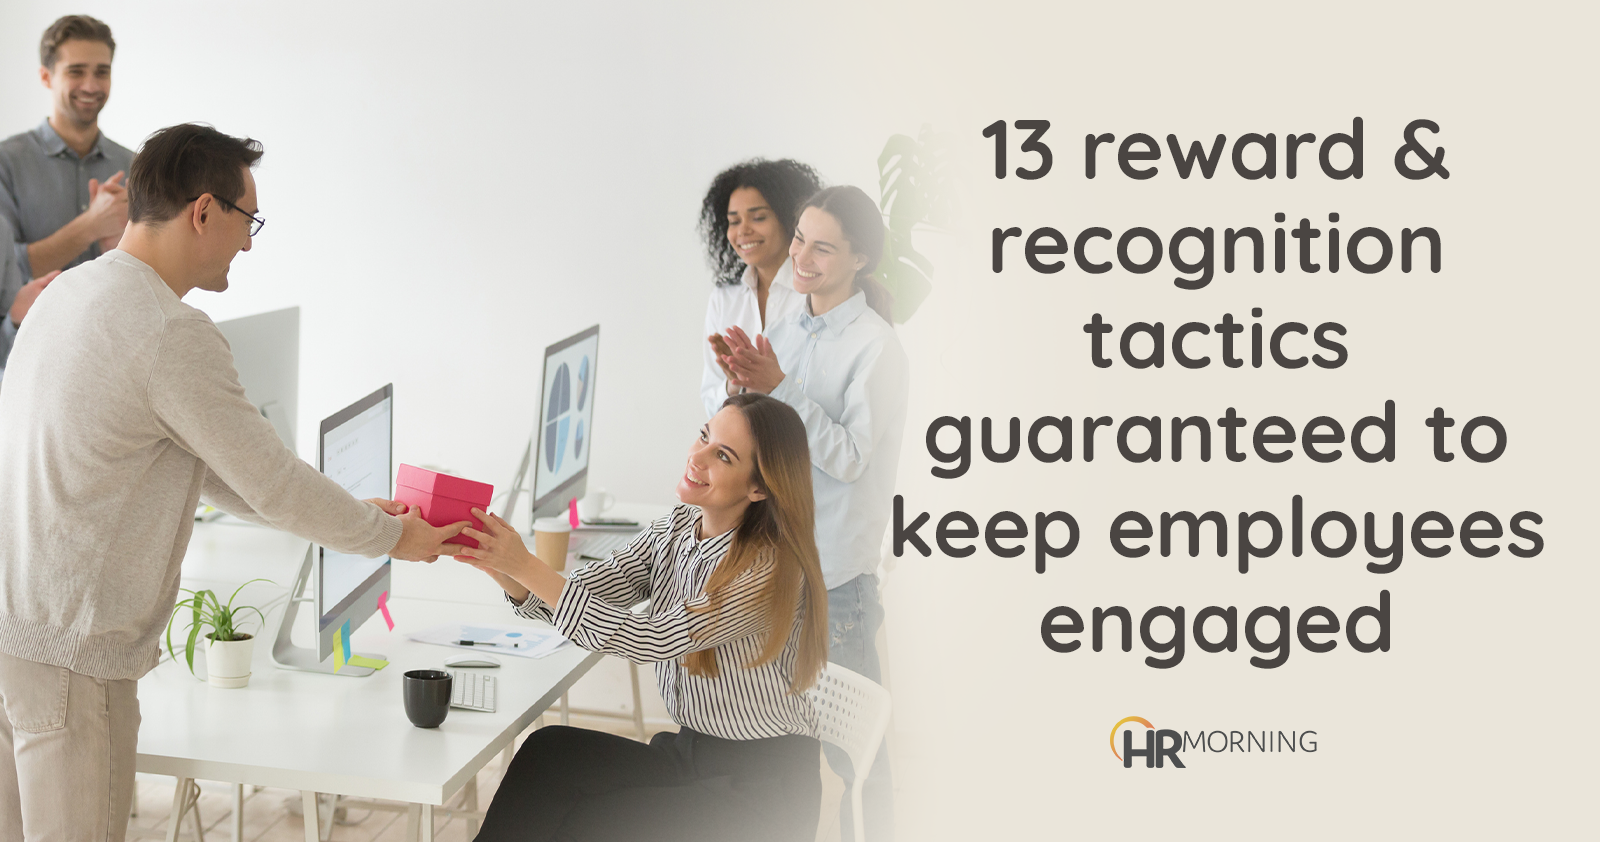 13 reward & recognition tacktics guaranteed to keep employees engaged